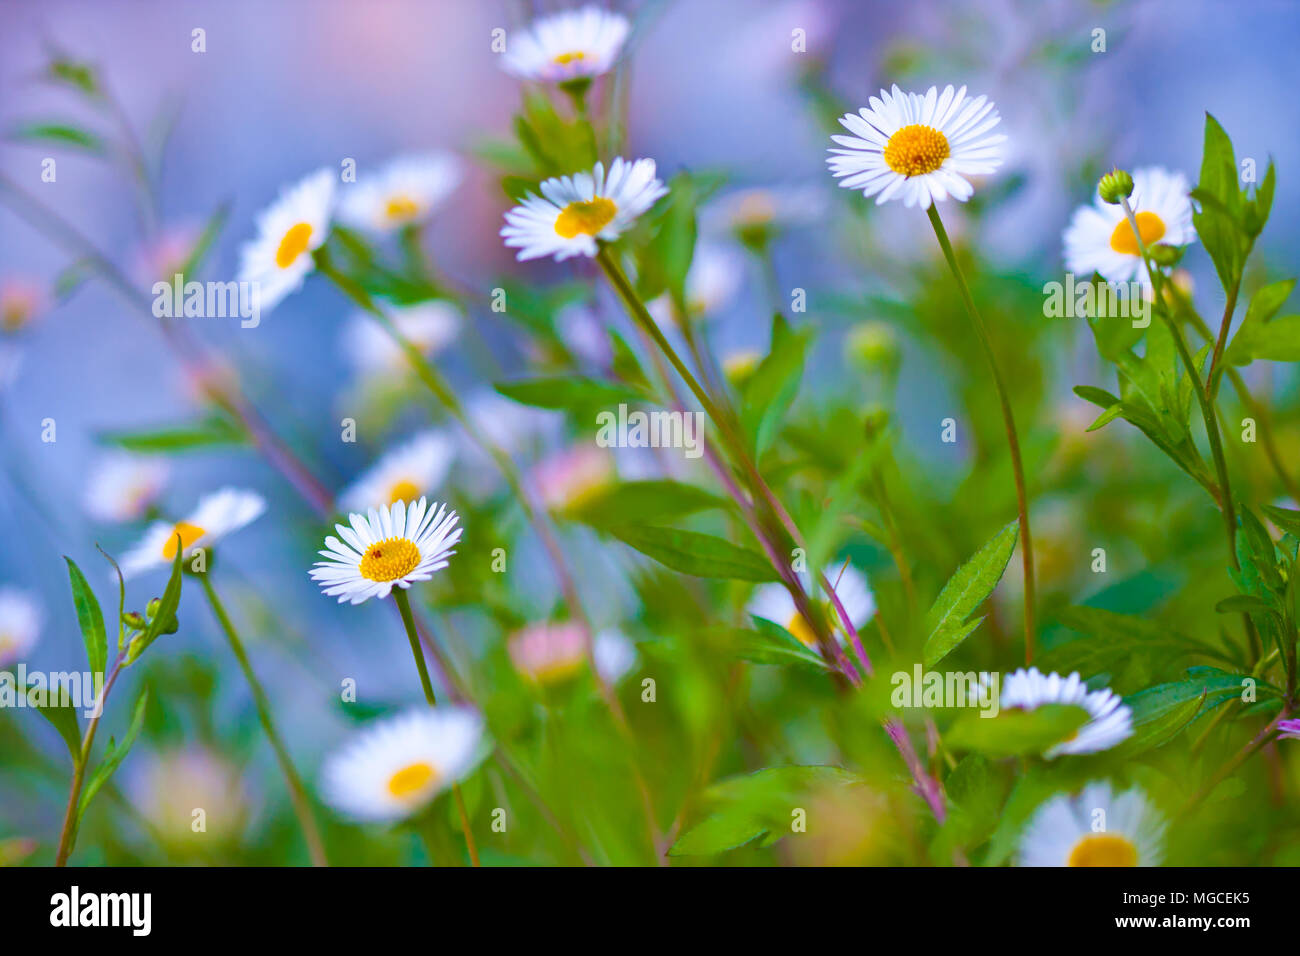 White daisy flower in the garden Stock Photo